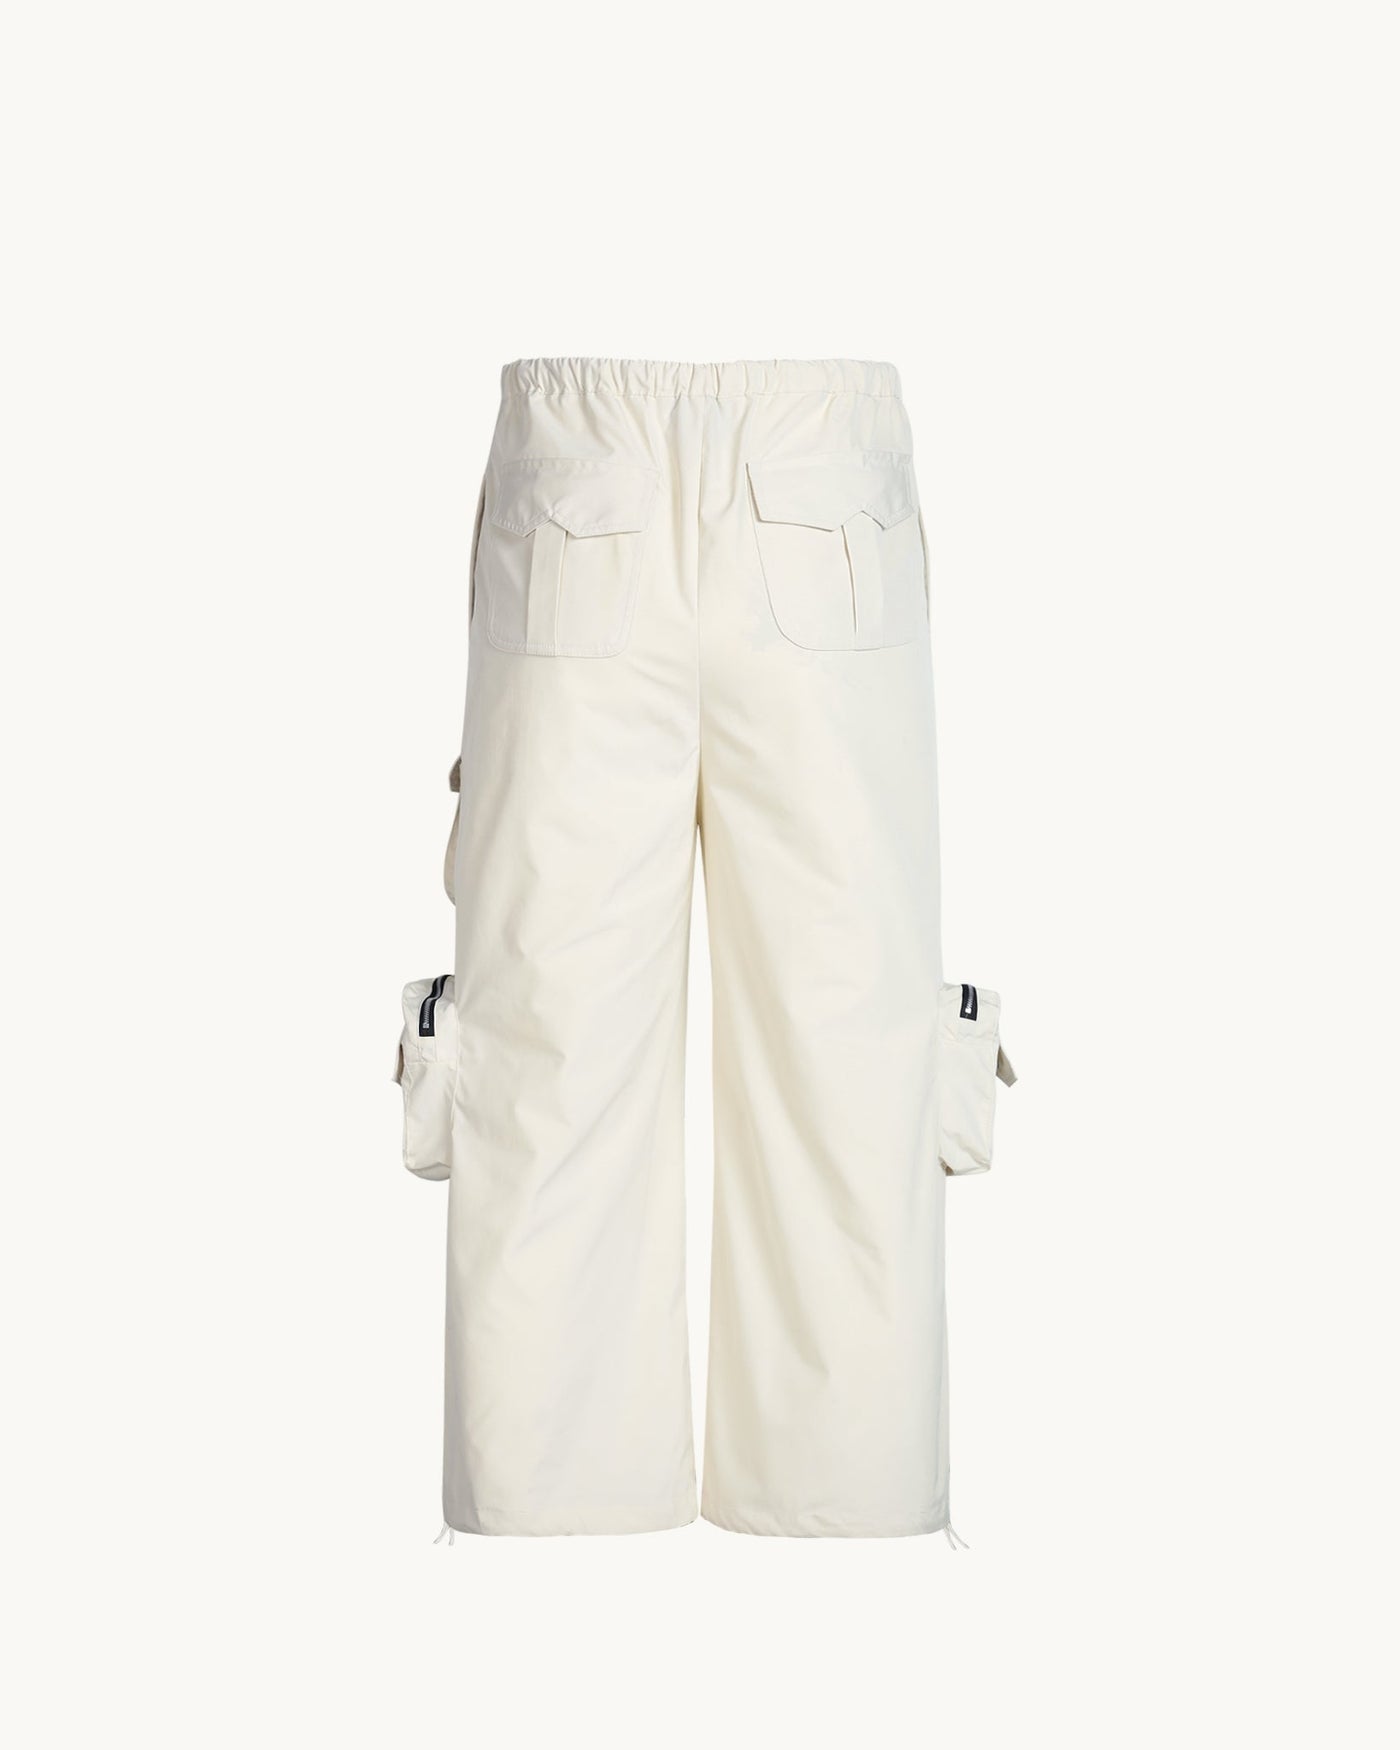 Parachute Pocket Pants - Off White - TOBI